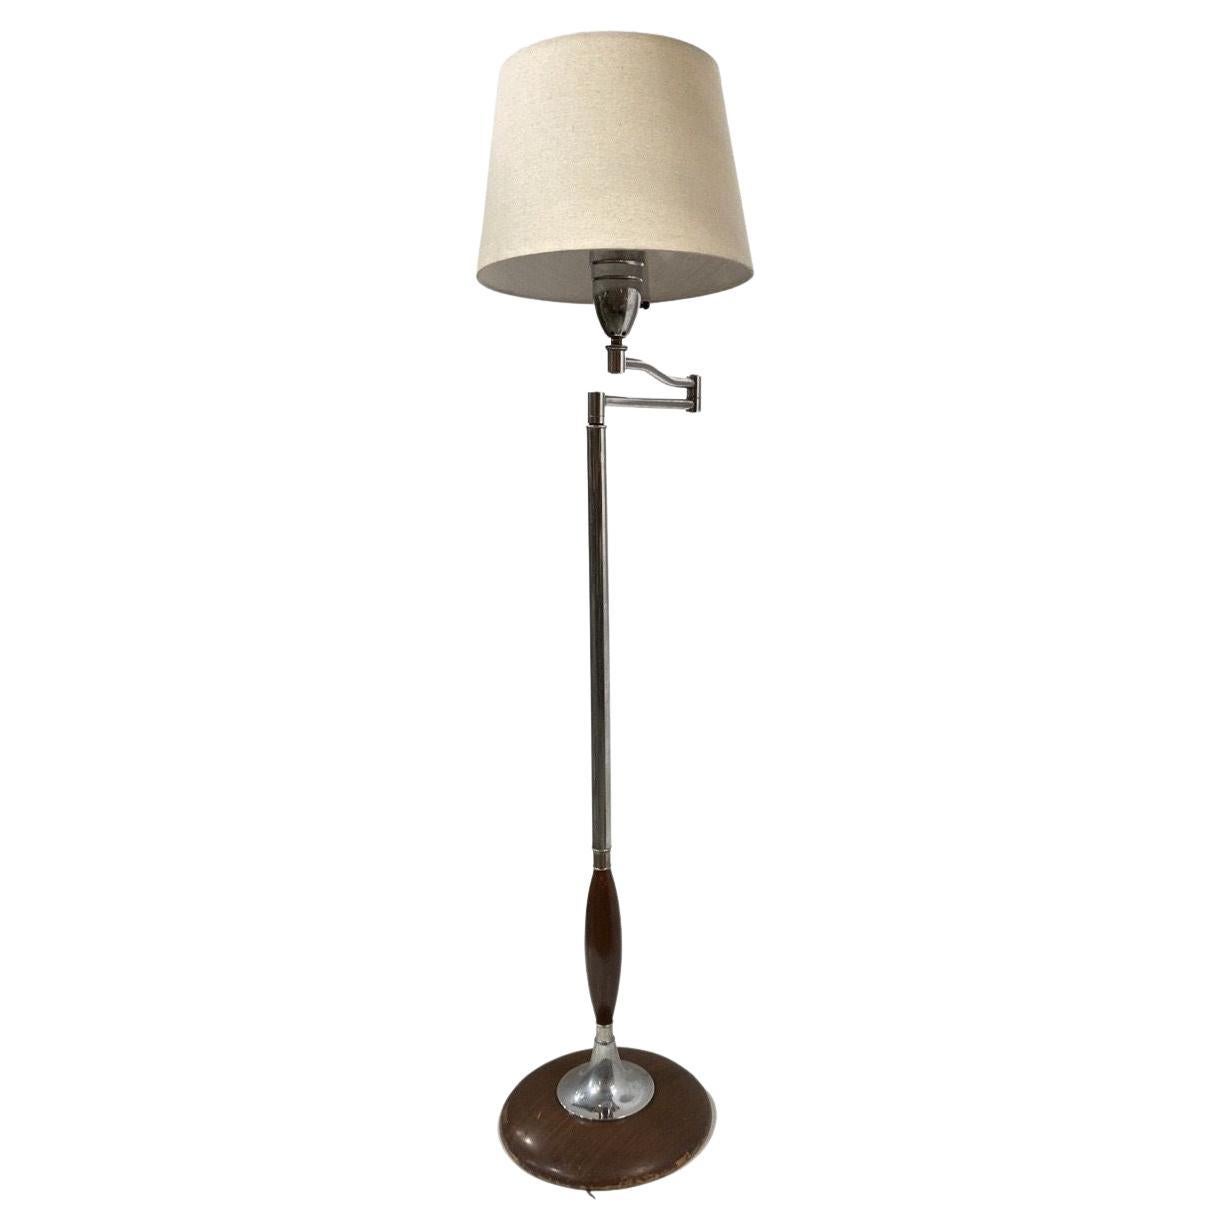 Art Moderne Wood and Chrome Swing Arm Floor Lamp For Sale